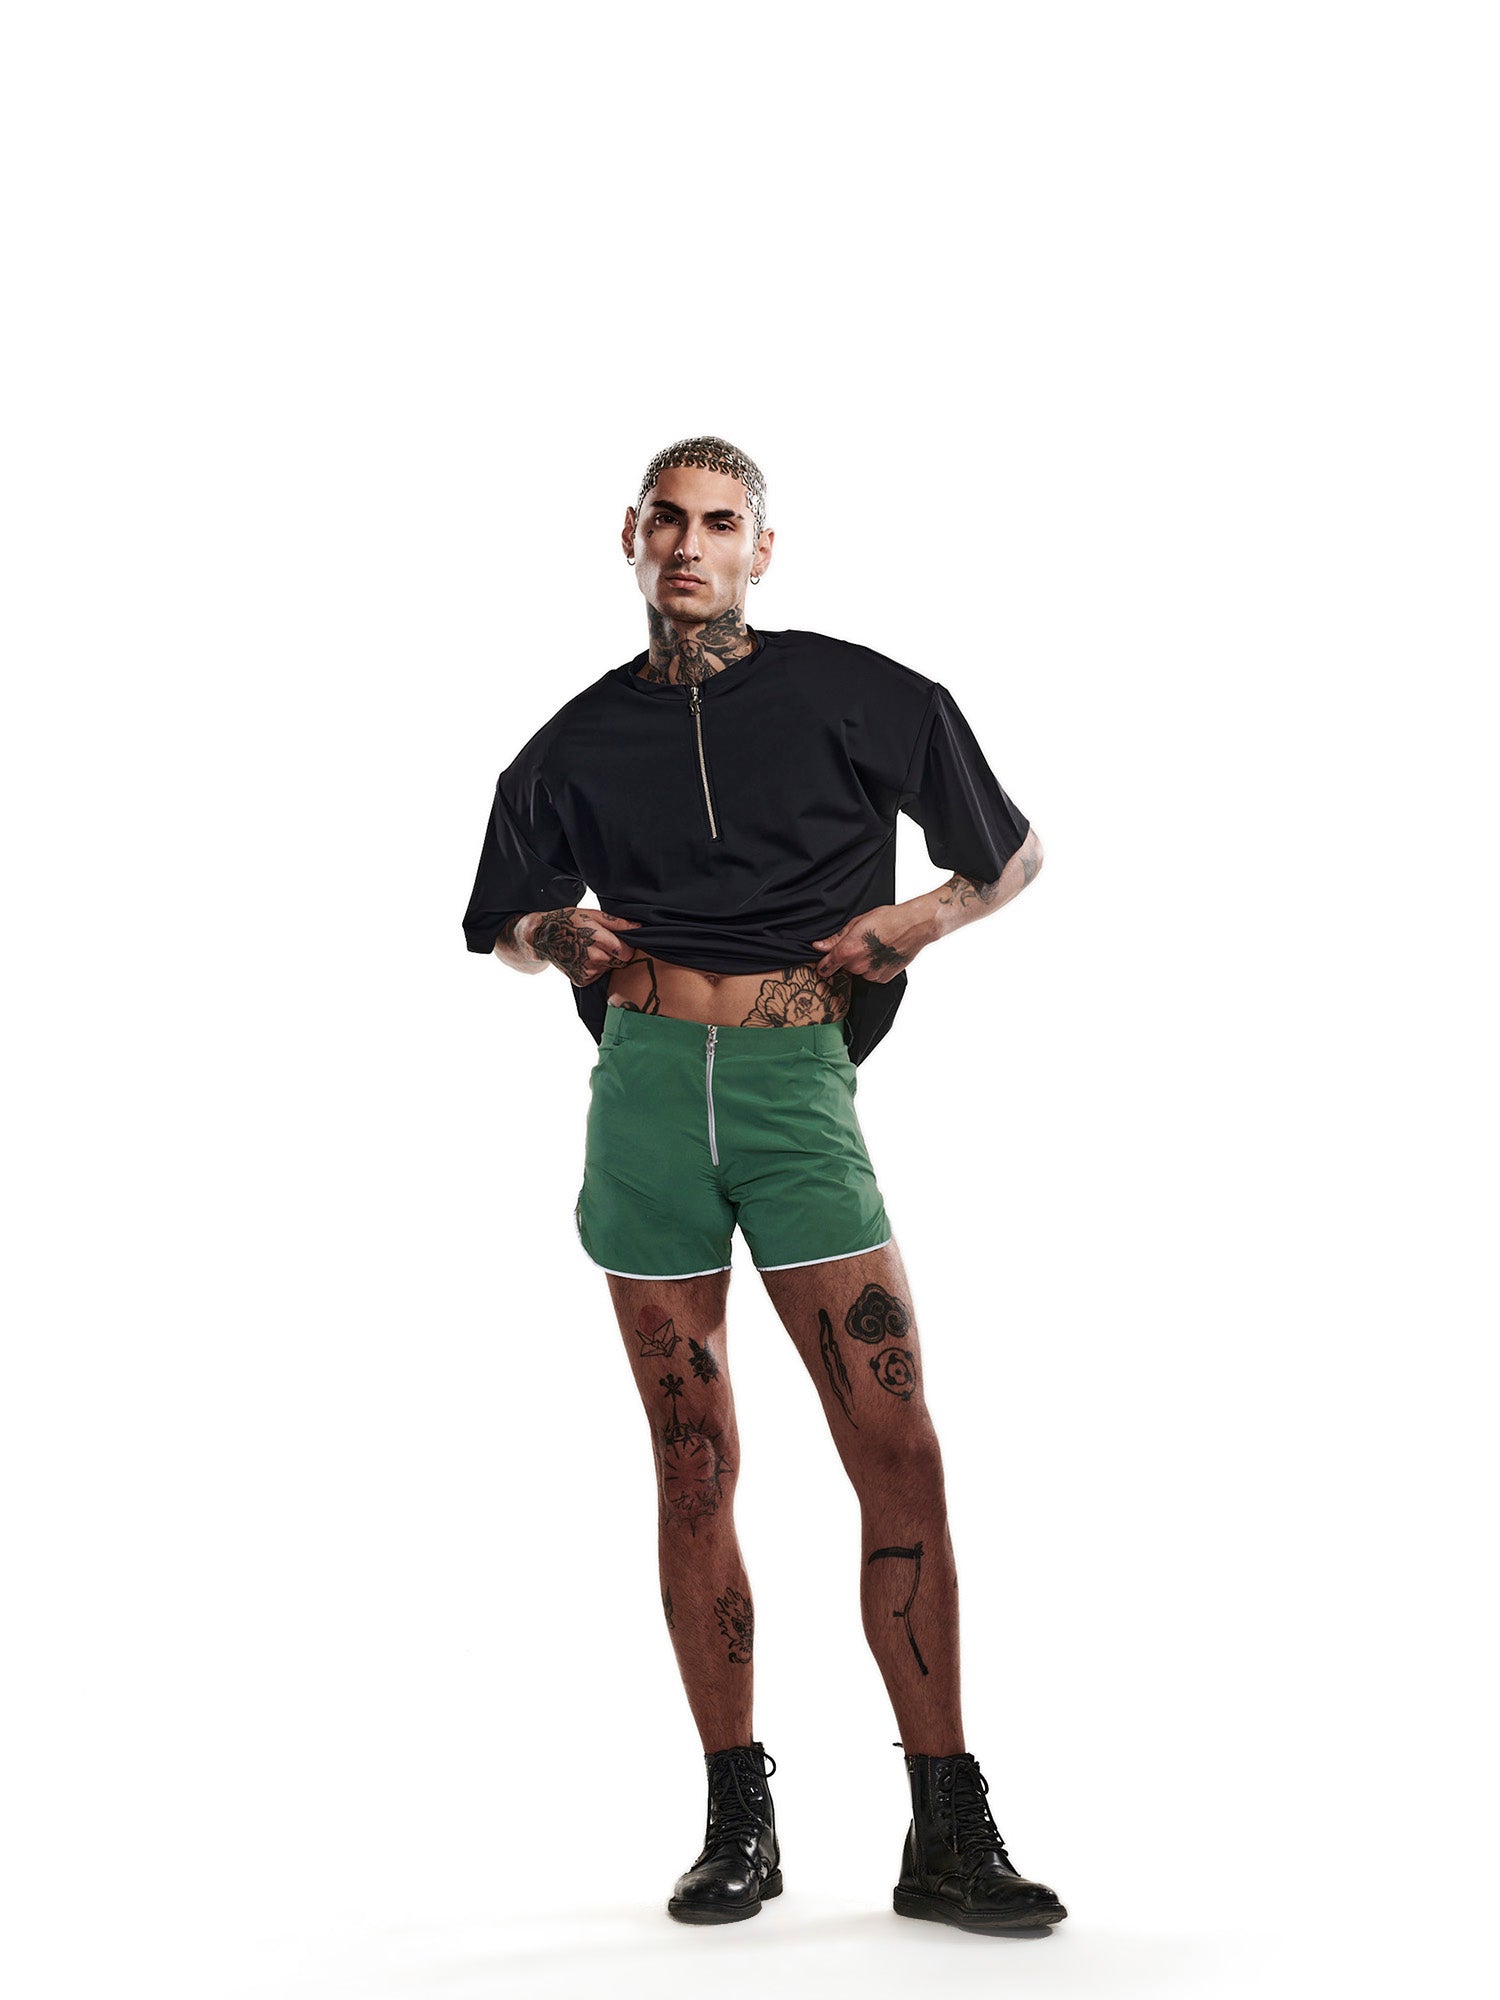 Green reflective shorts